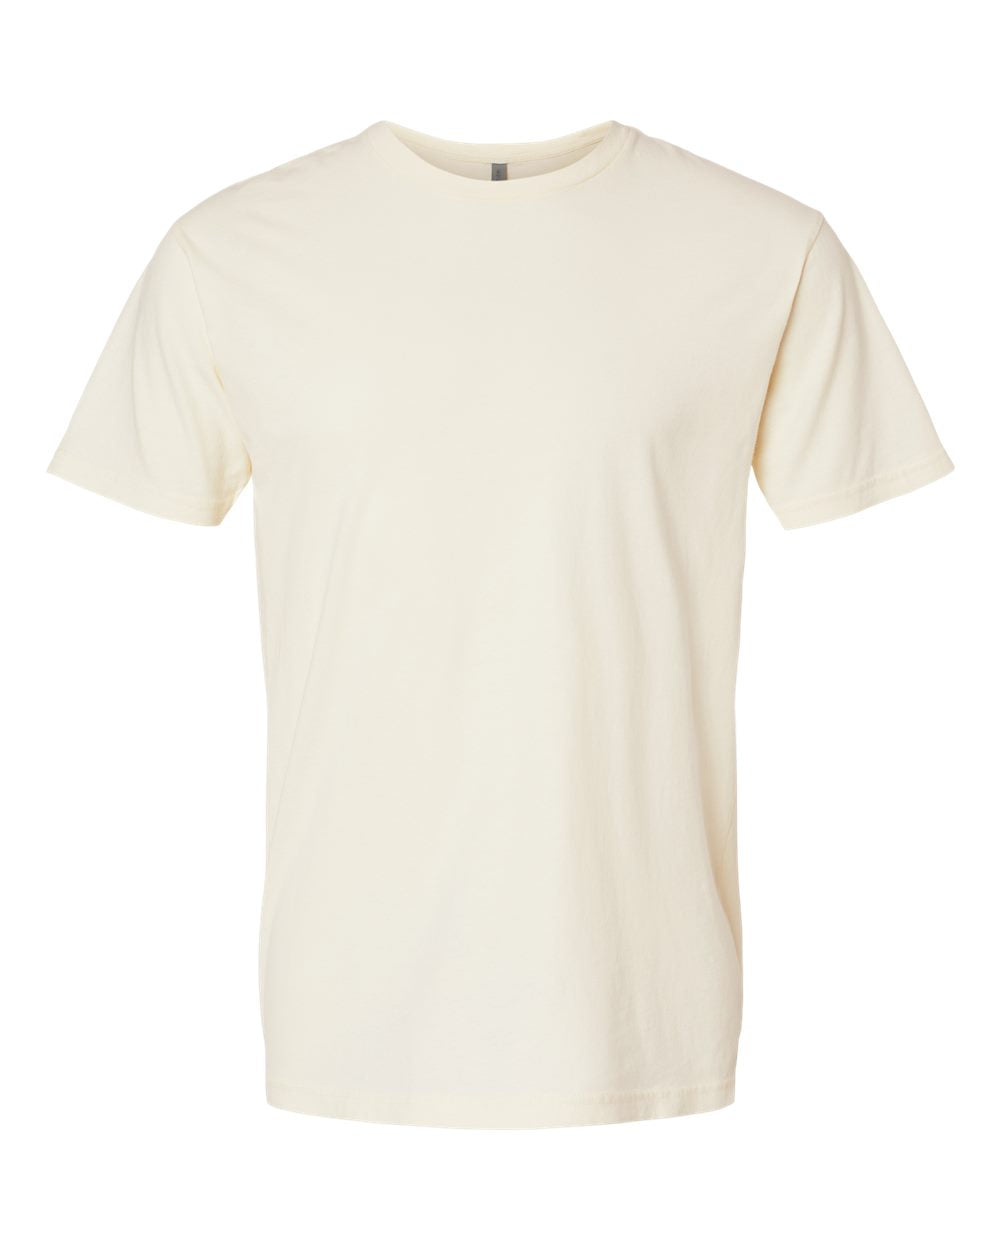 Next Level - Soft Wash T-Shirt - 3600SW